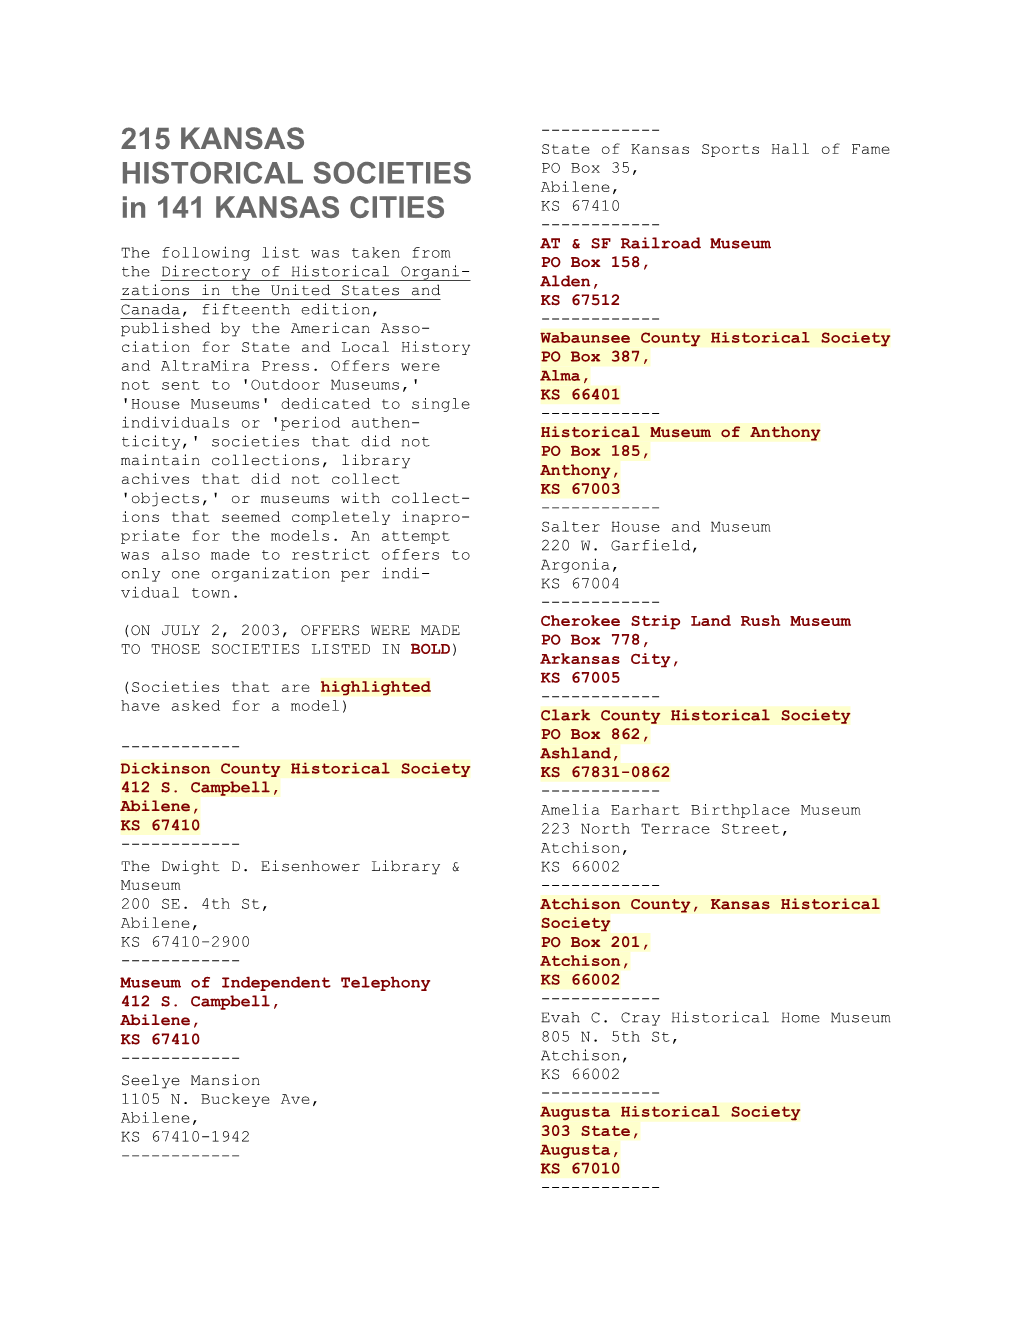 215 KANSAS HISTORICAL SOCIETIES in 141 KANSAS CITIES